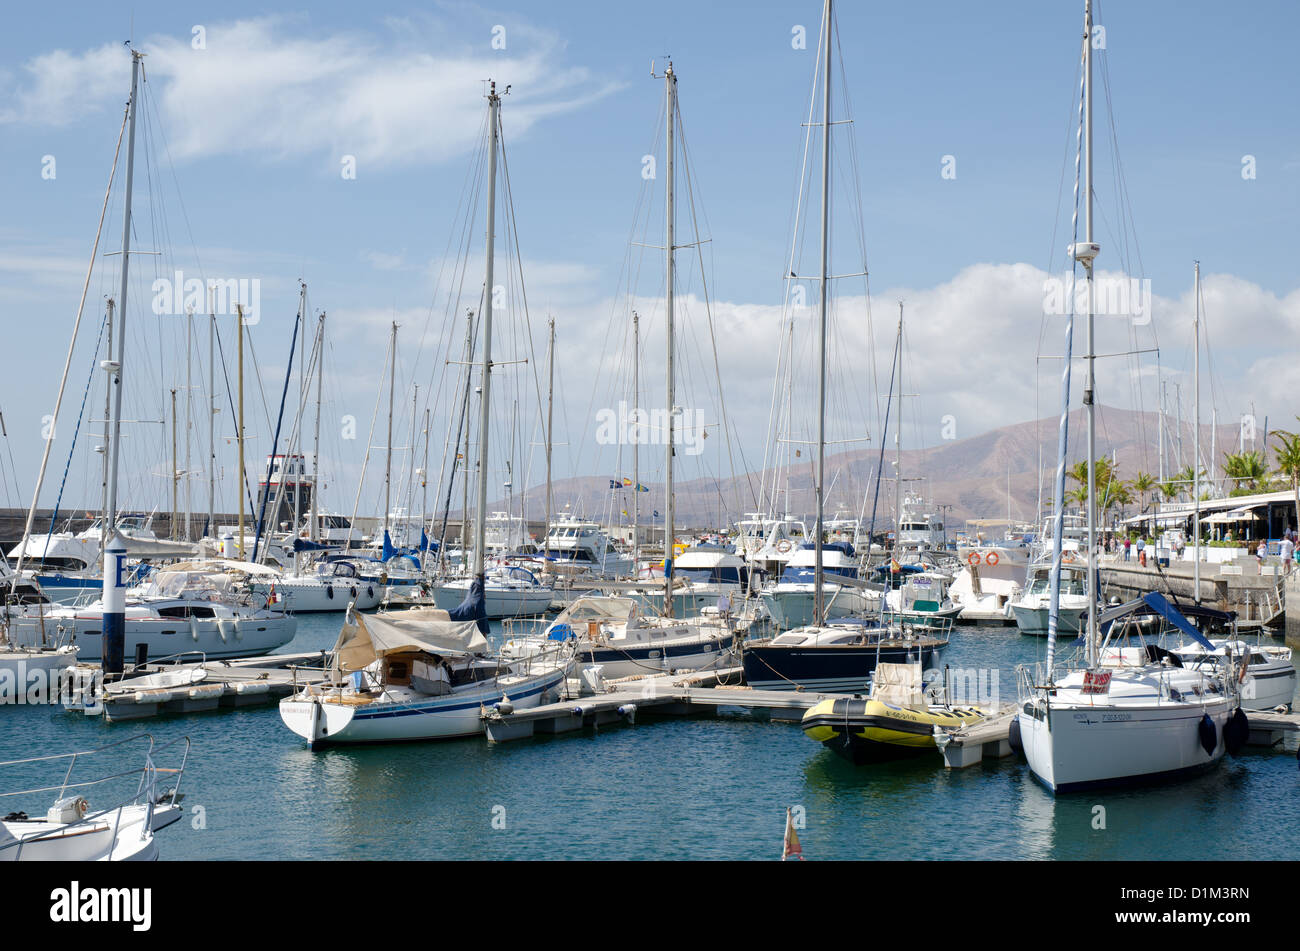 Boats and Yachts in a Marina at Puerto Calero Lanzarote Canary Islands Stock Photo